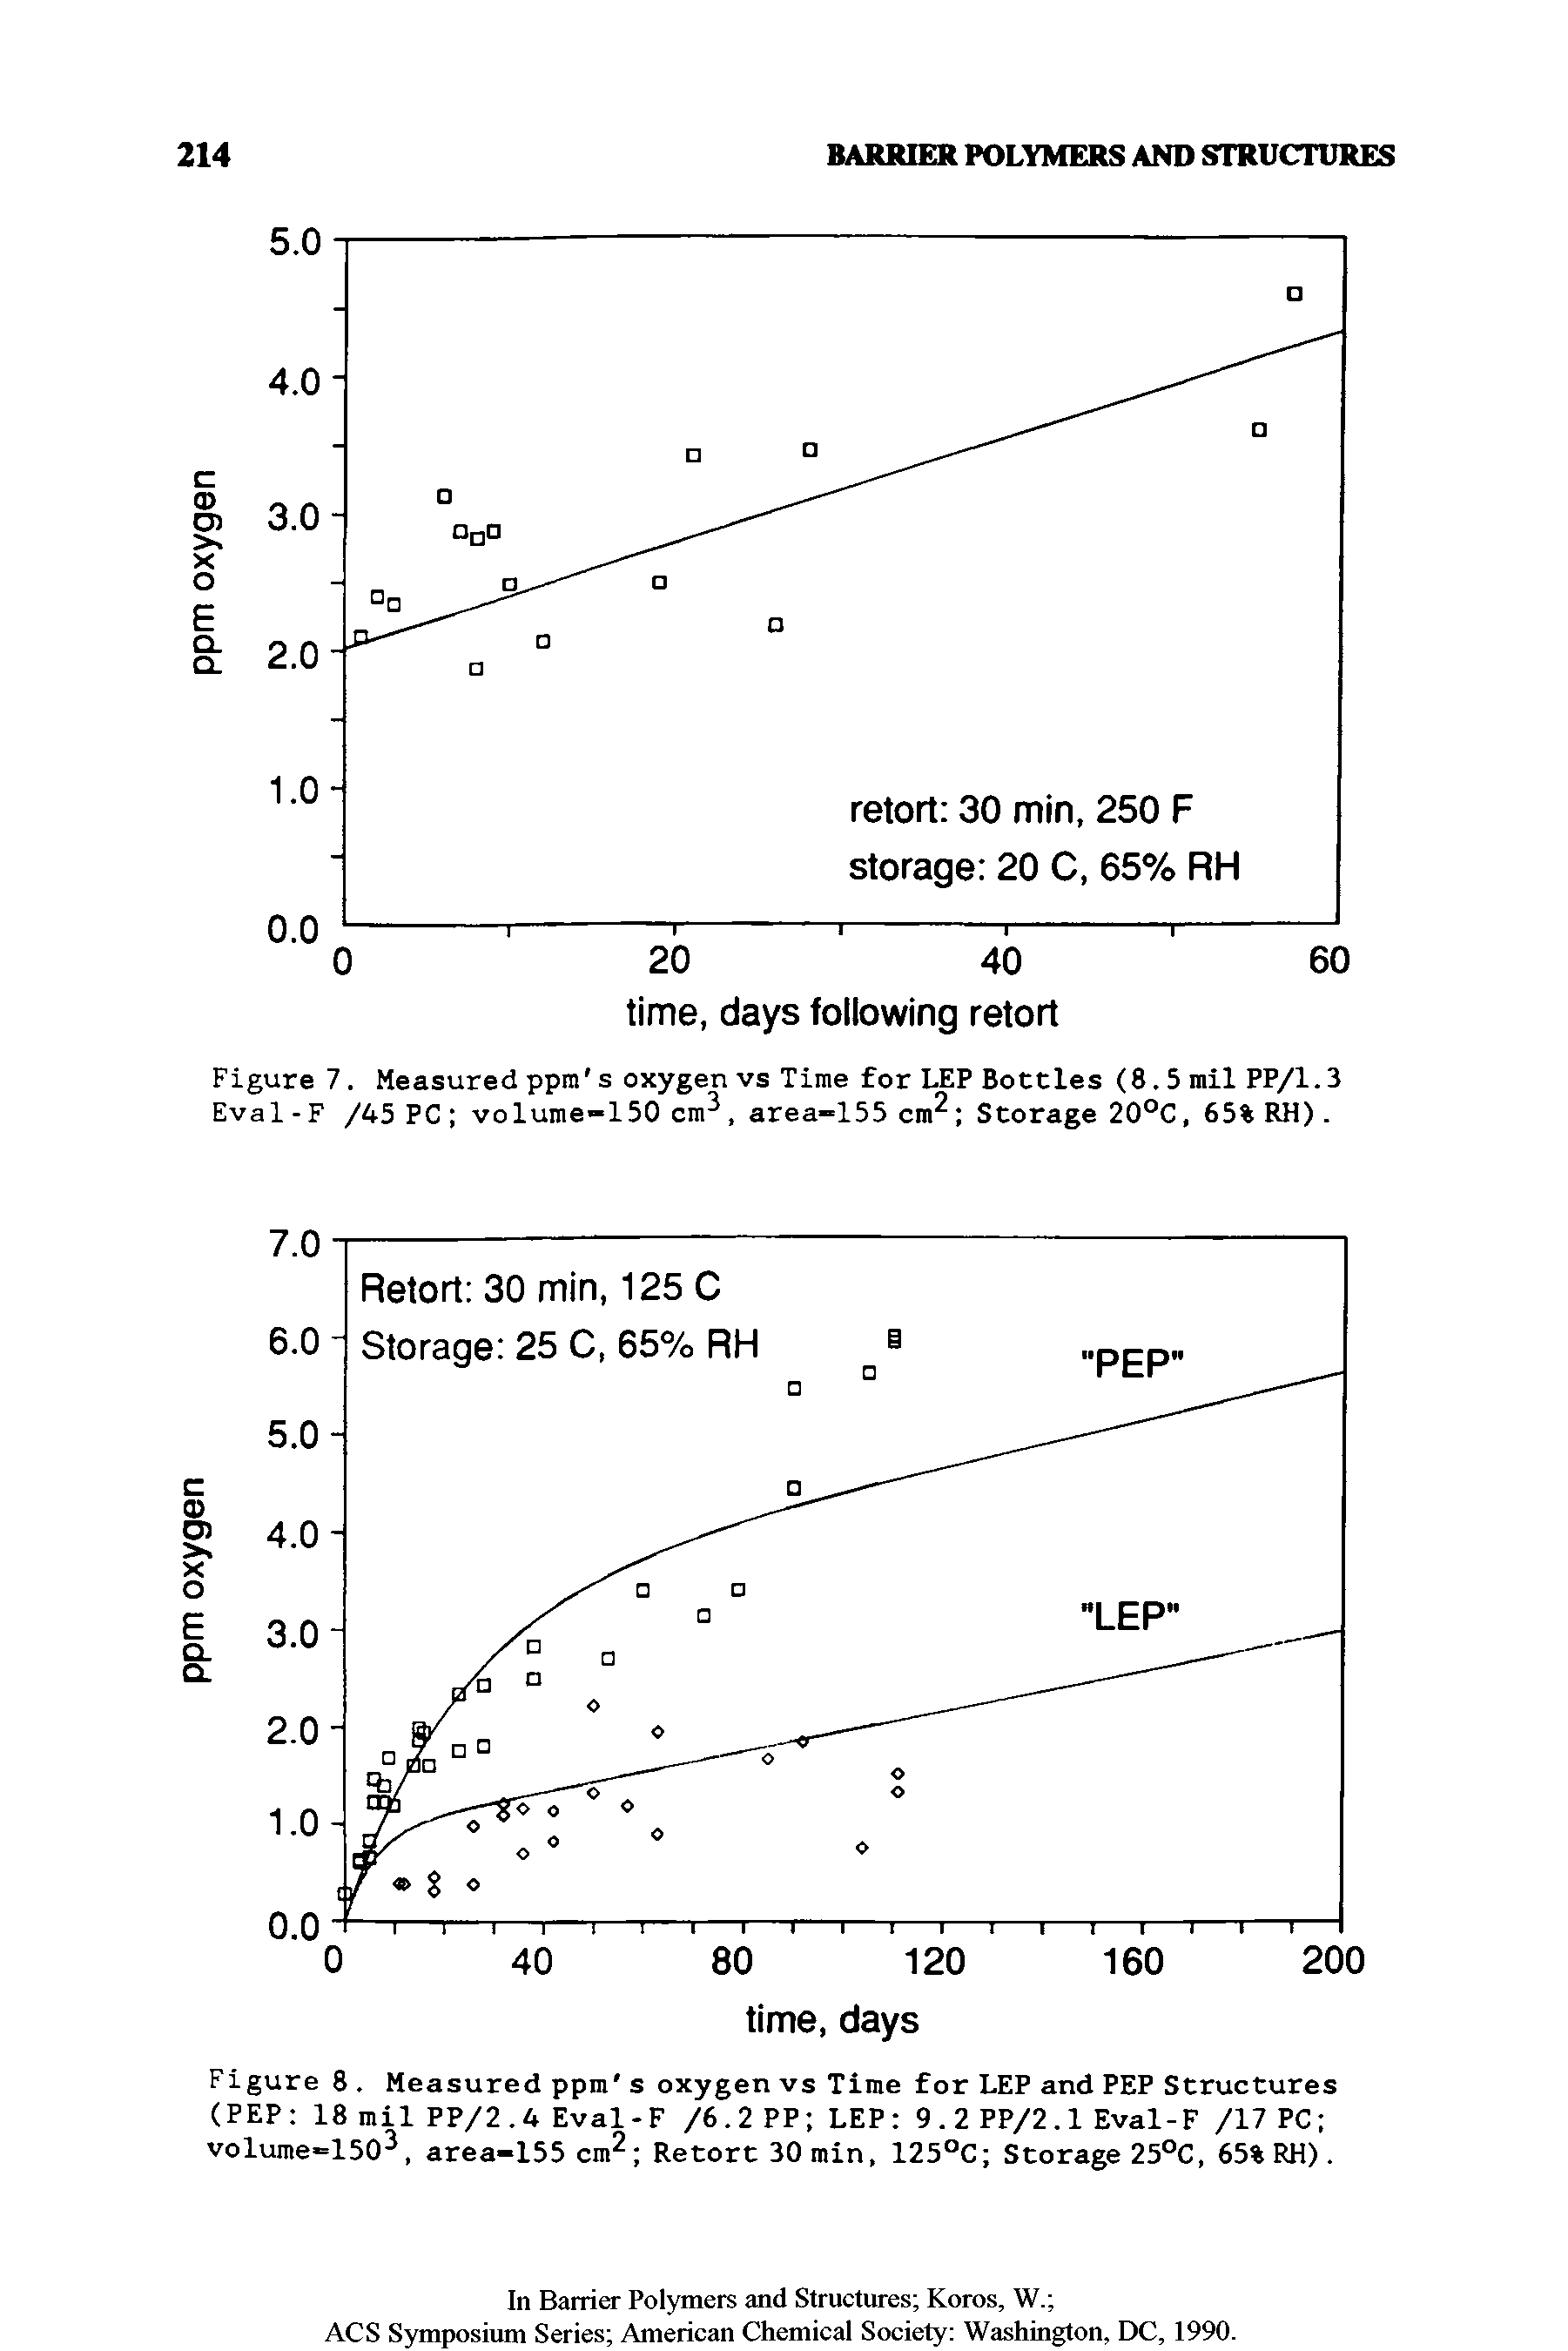 Figure 7. Measured ppm s oxygen vs Time for LEP Bottles (8.5 mil PP/1.3 Eval - F /45 PC volume-150 cm3, area-155 cm2 Storage 20°C, 65% RH).